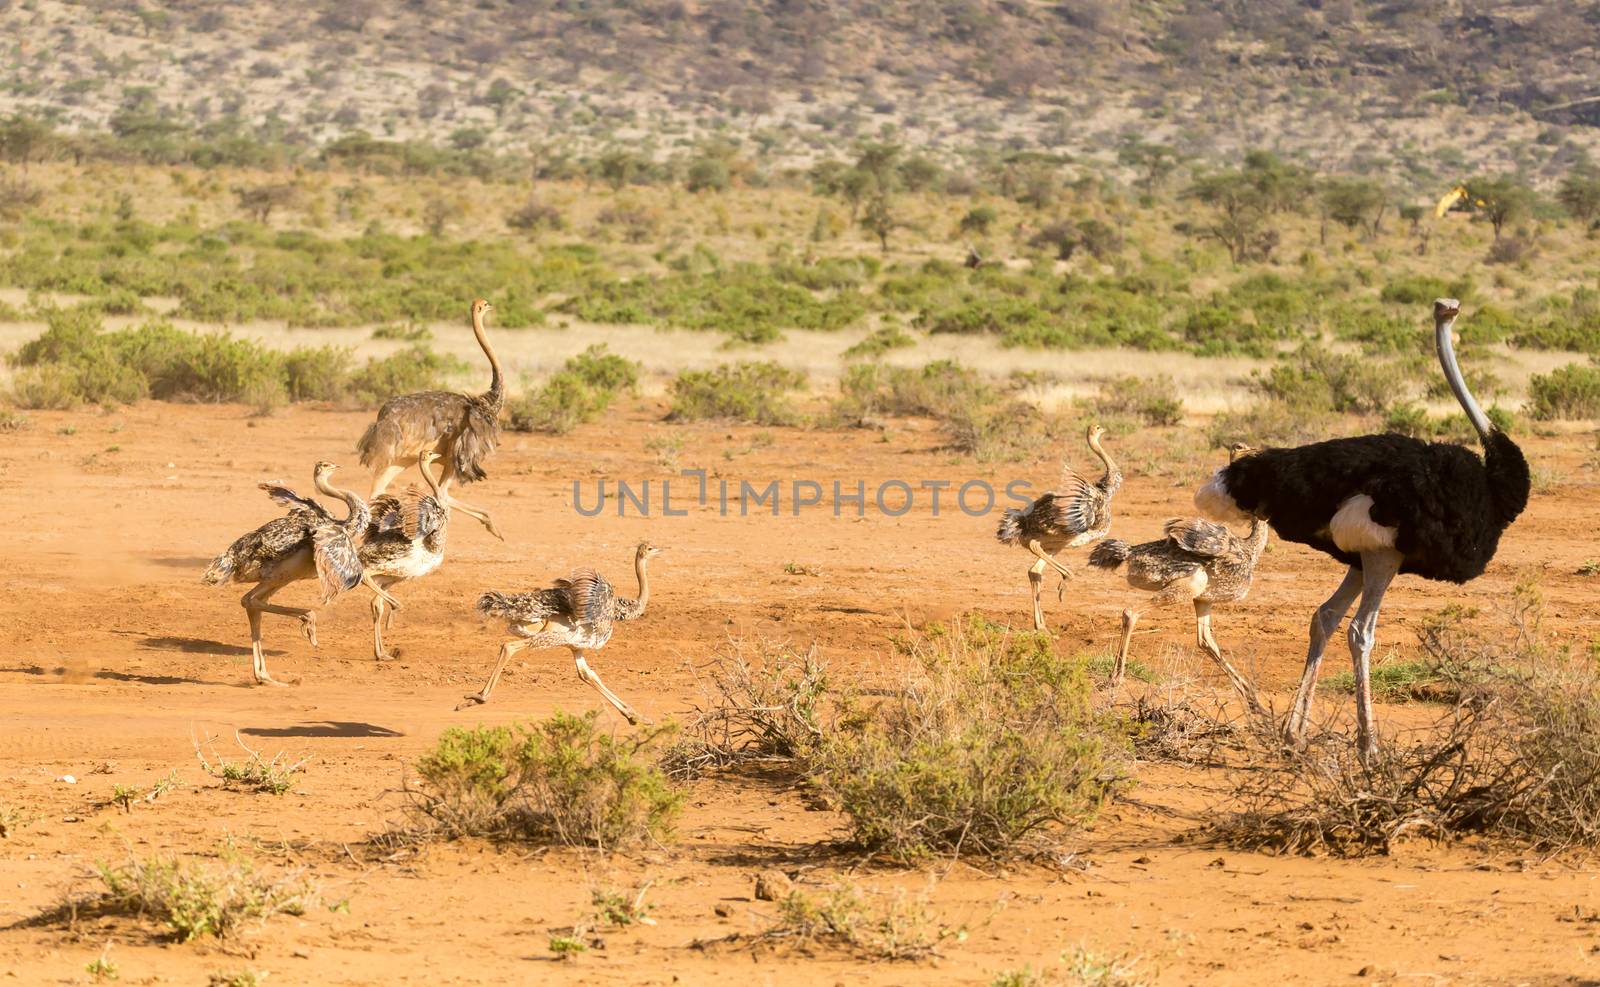 The ostrich family runs through the savanna of Kenya